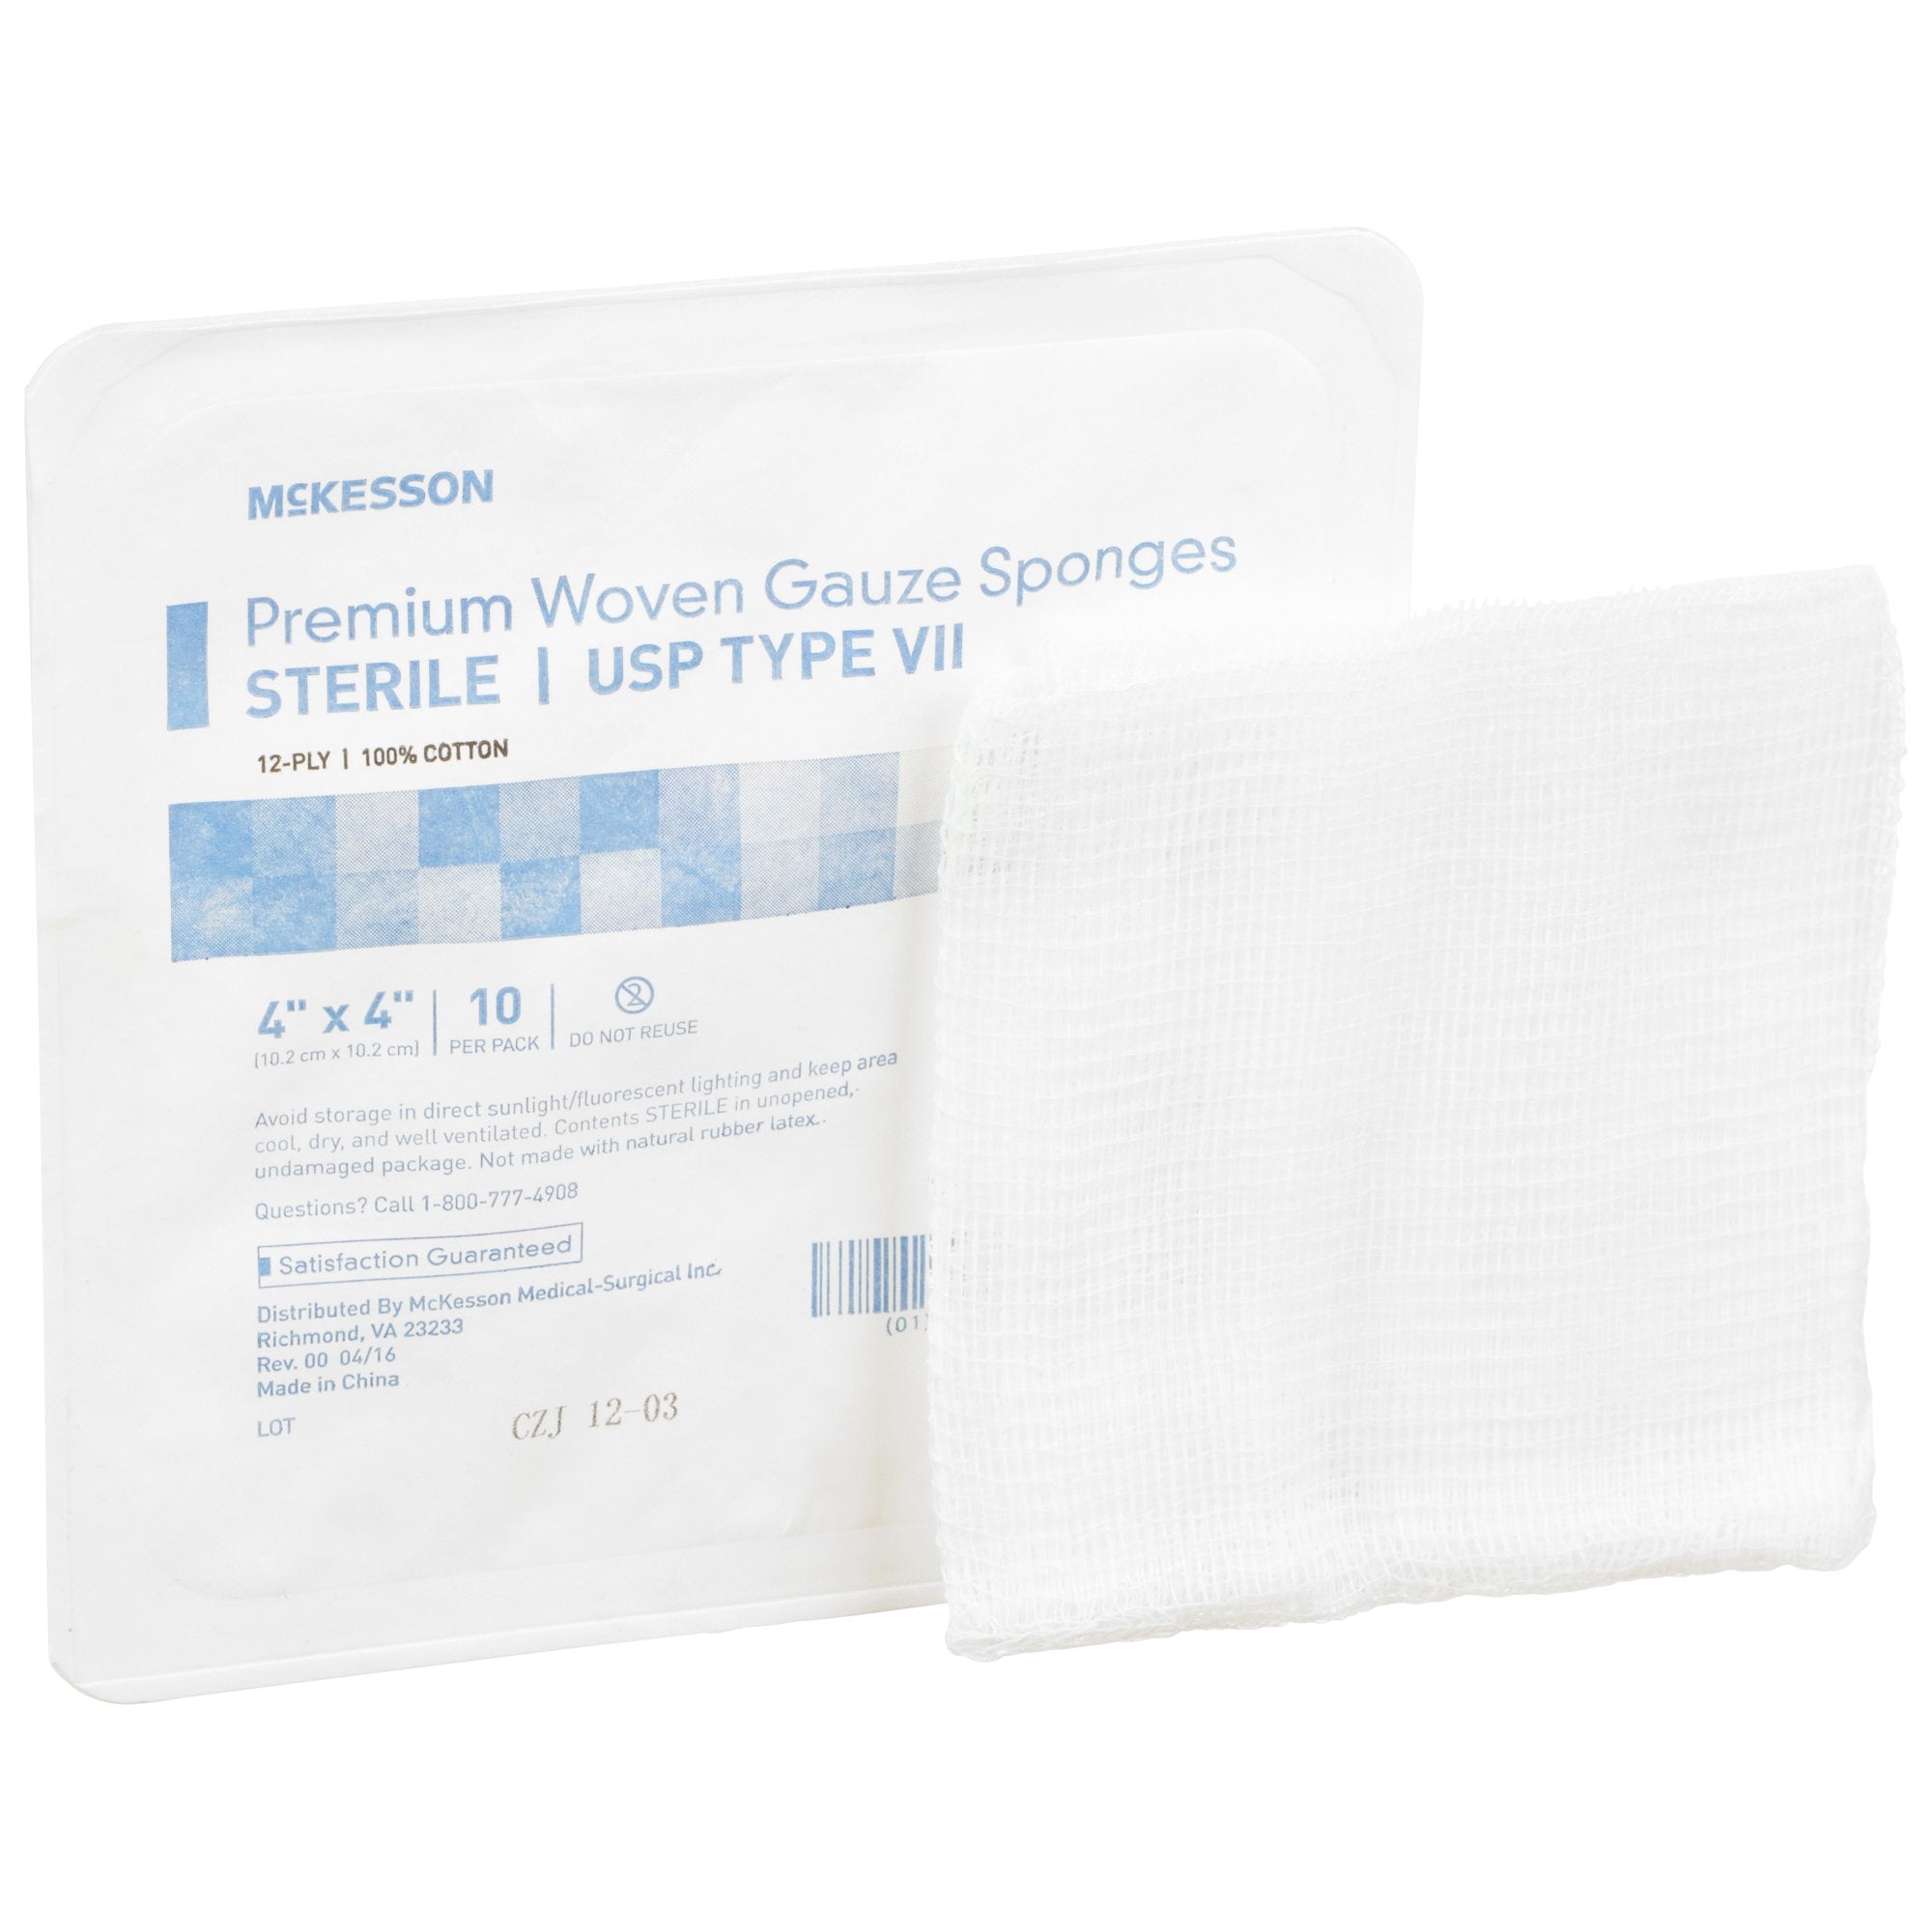 McKesson Sterile USP Type VII Gauze Sponge 4x4" - 1280 Pack for Wound Care